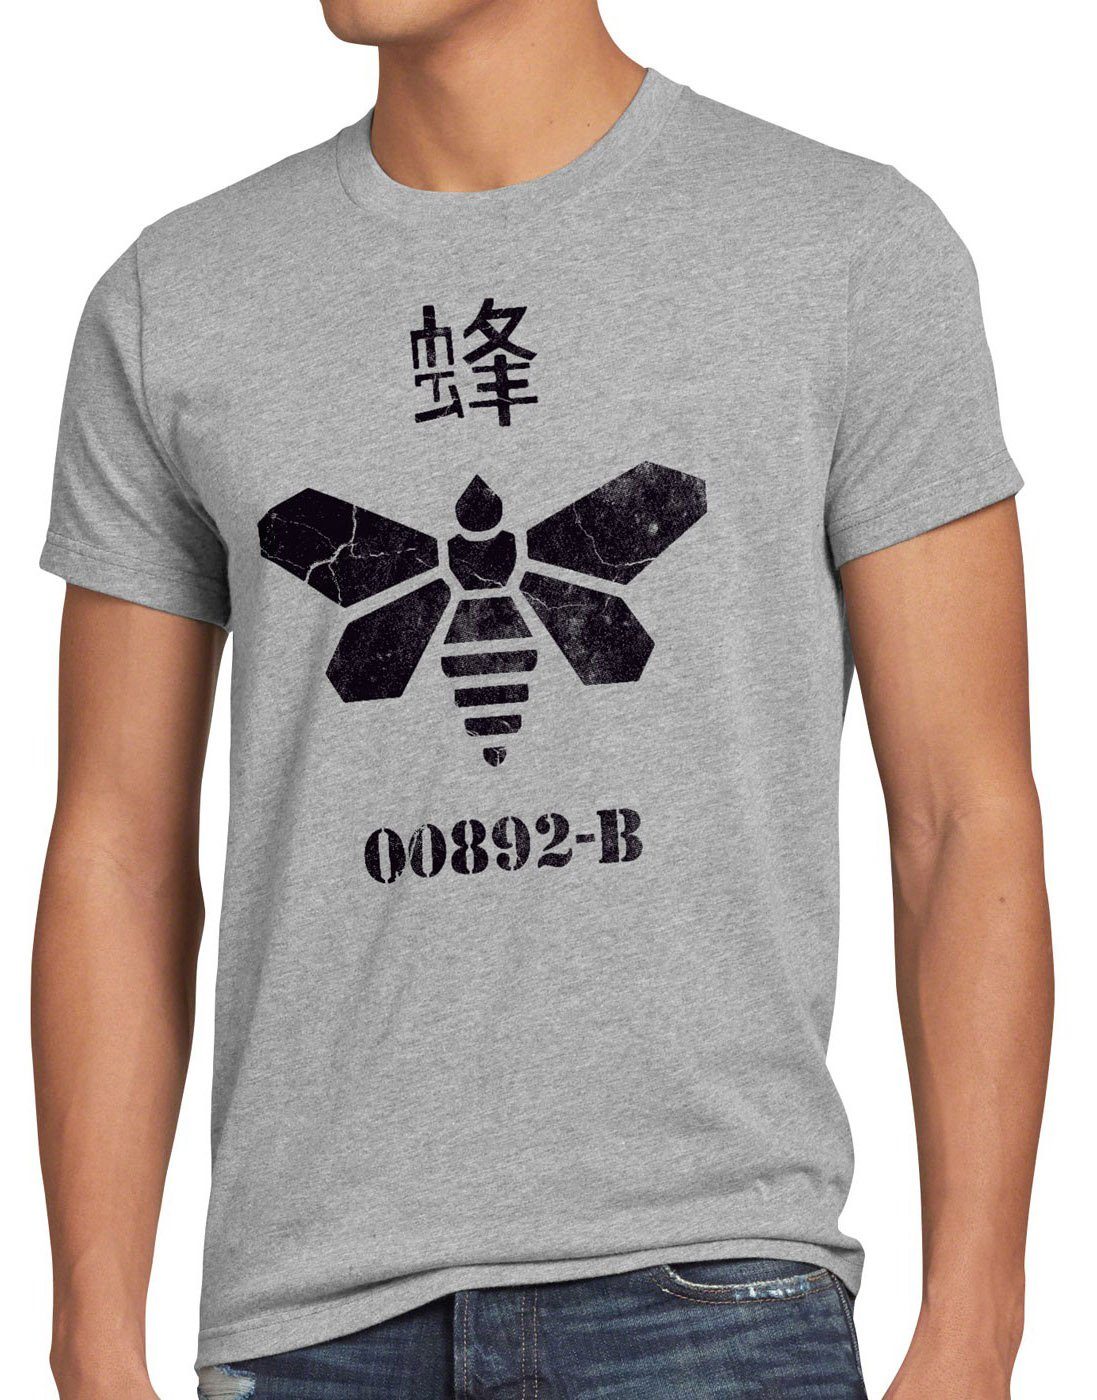 heisenberg bad grau breaking style3 Moth walter Chemical biene chemie Golden T-Shirt meliert Print-Shirt Herren